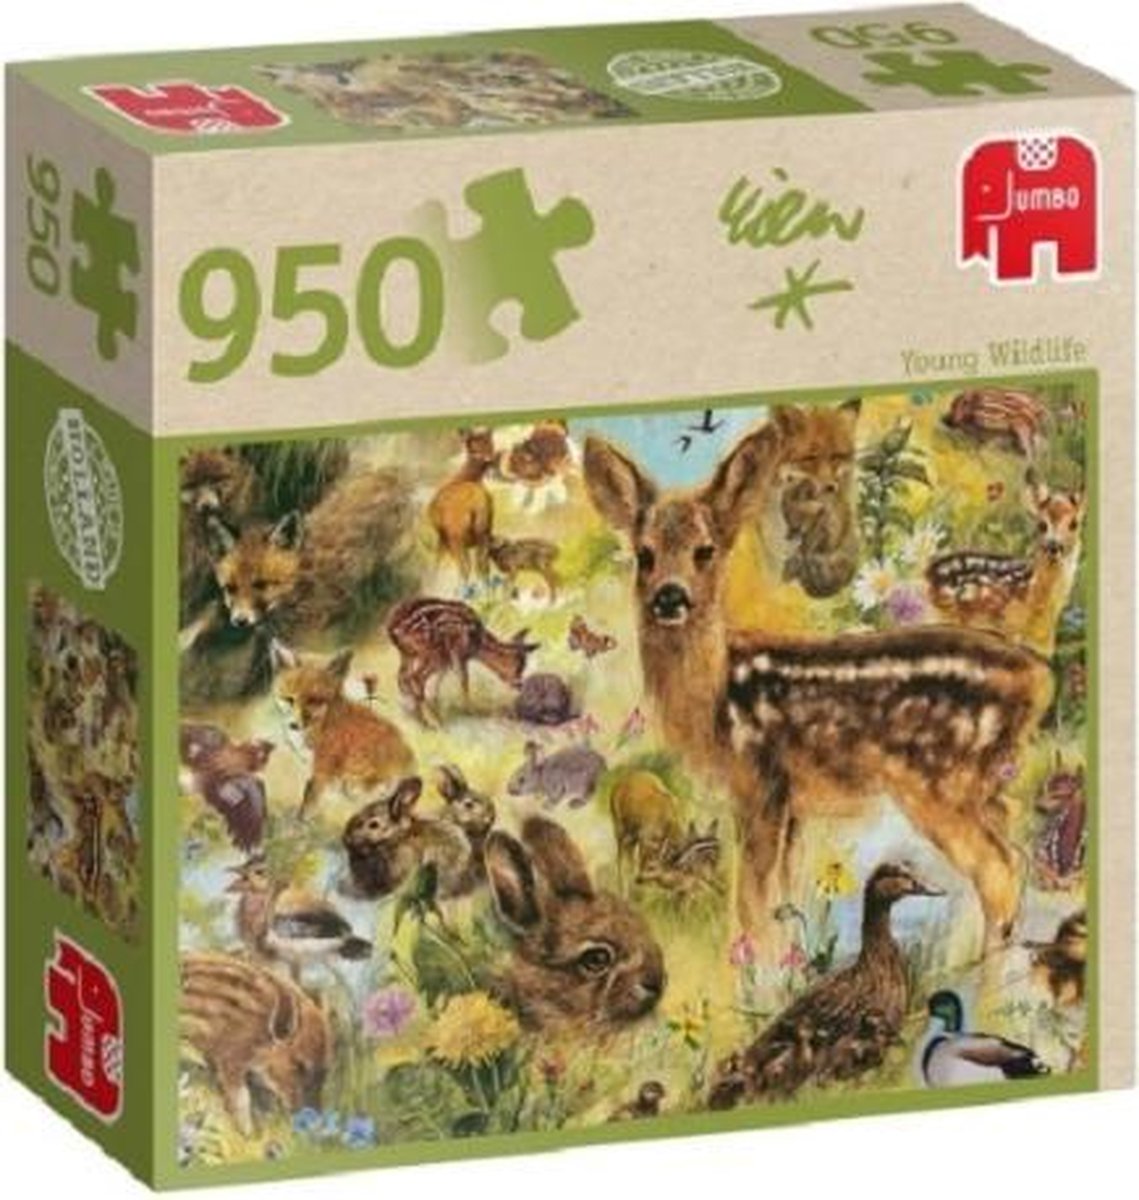 Jumbo Premium Collection Puzzel Rien Poortvliet: Young Wildlife - Legpuzzel - 950 stukjes